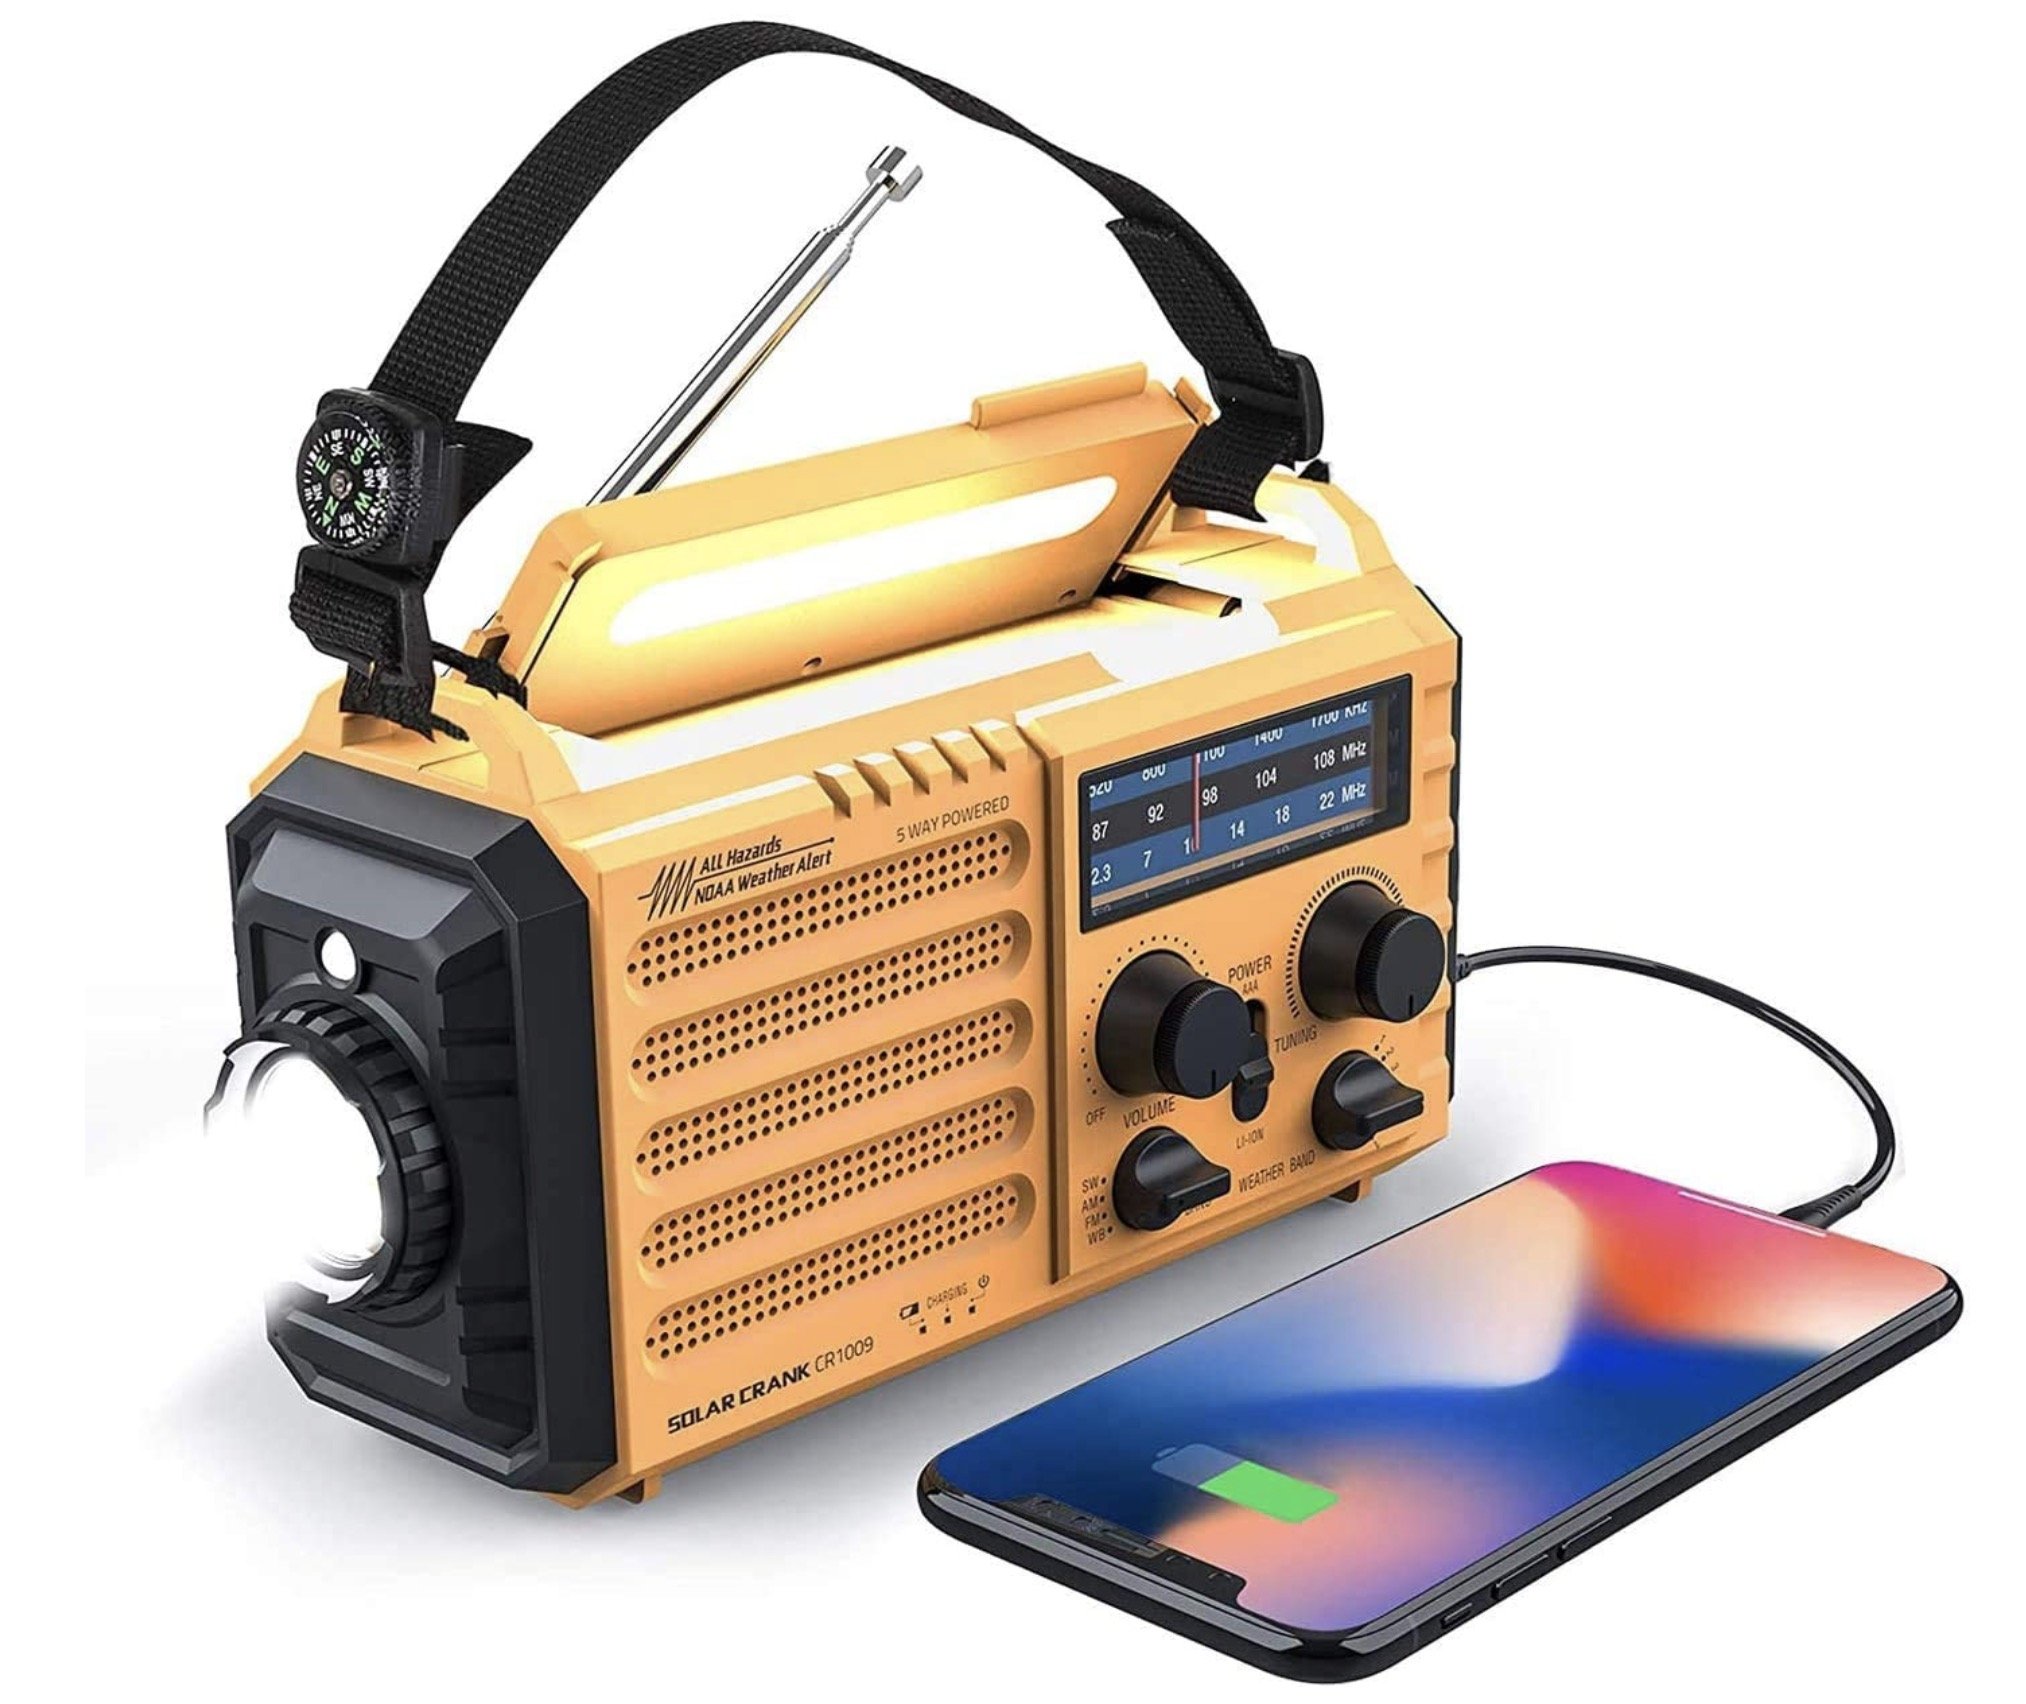 Solar powered radio